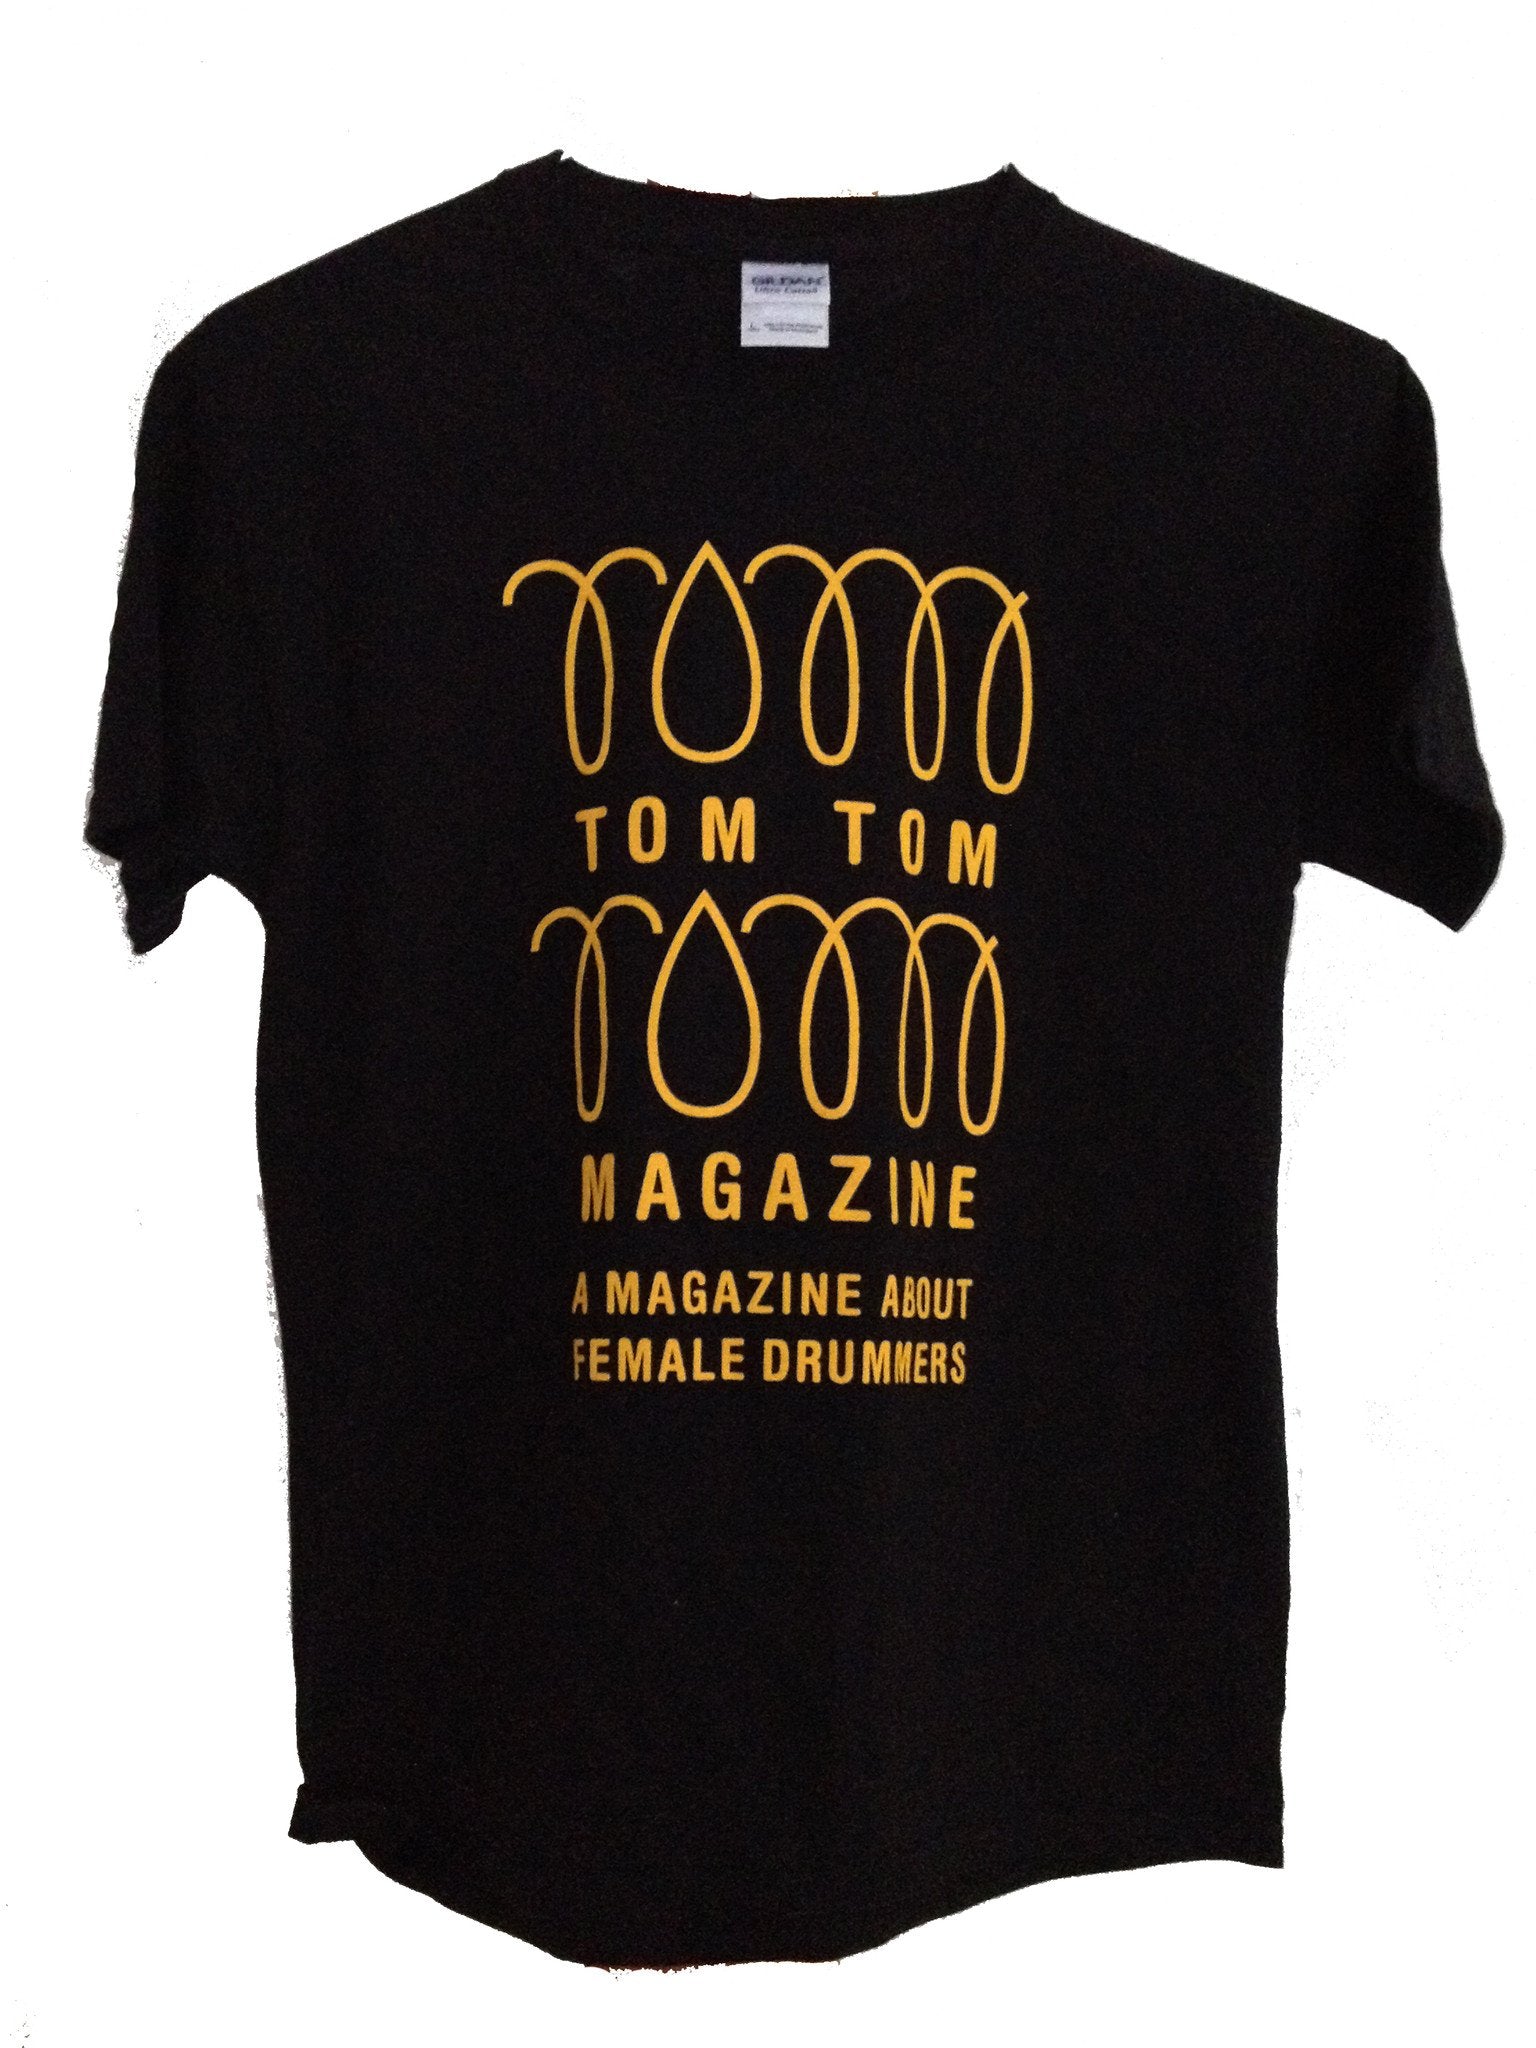 Tom Tom Magazine T-Shirt Black with Yellow Print – wellselltomtom